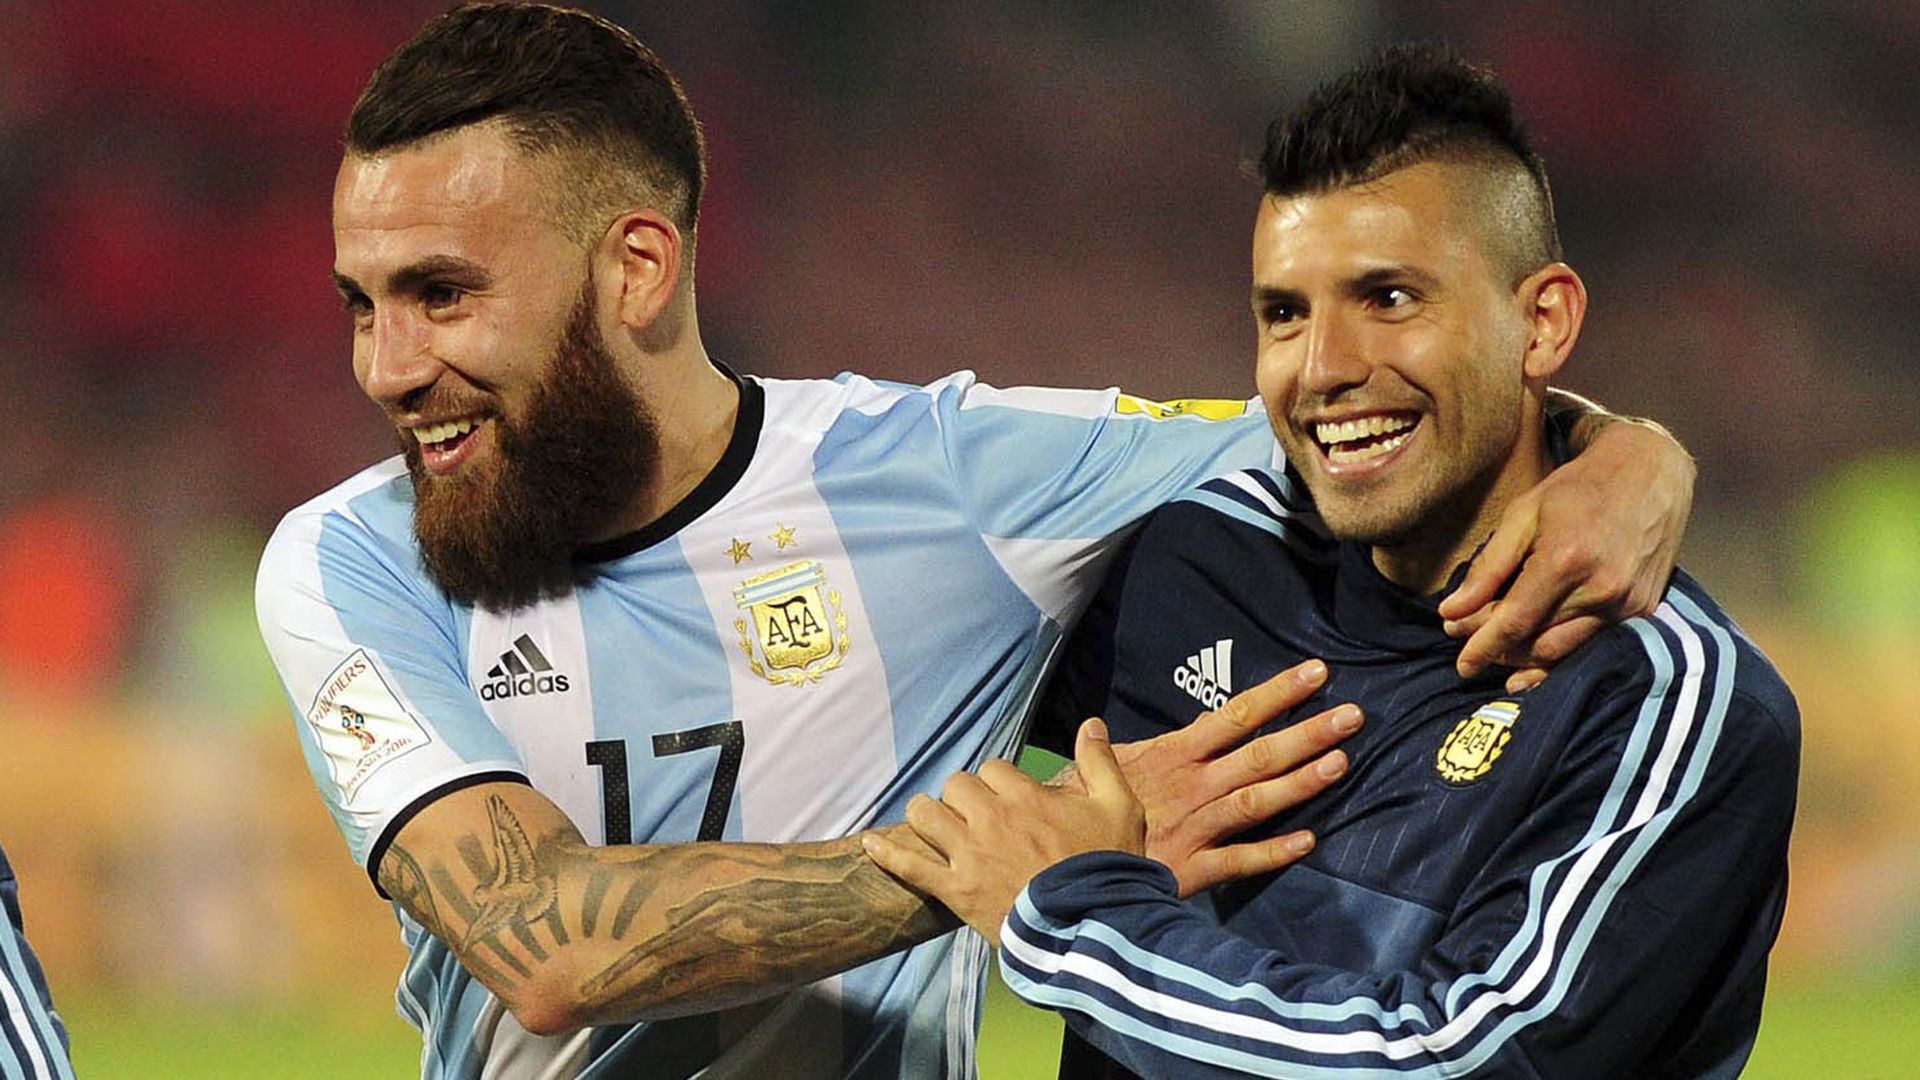 Argentina's Nicolás Otamendi picks positive from Nigeria's loss